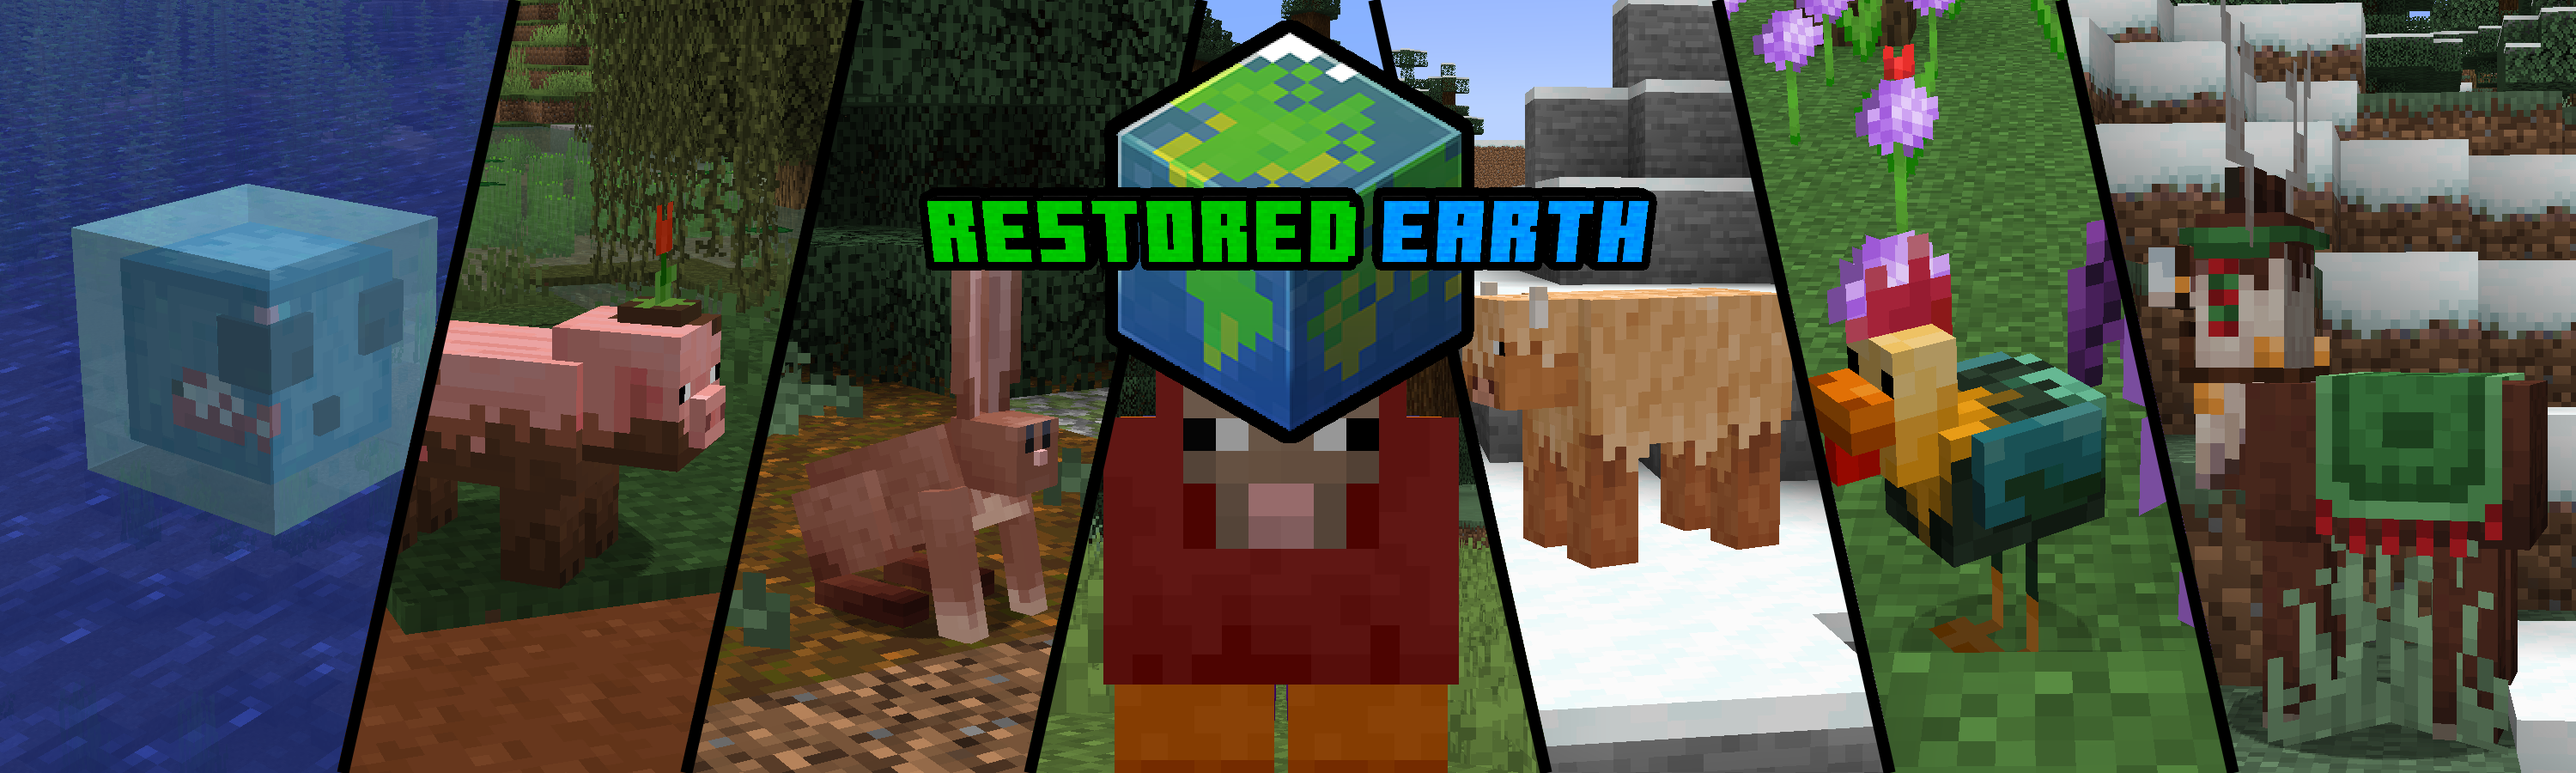 Restored Earth screenshot 1